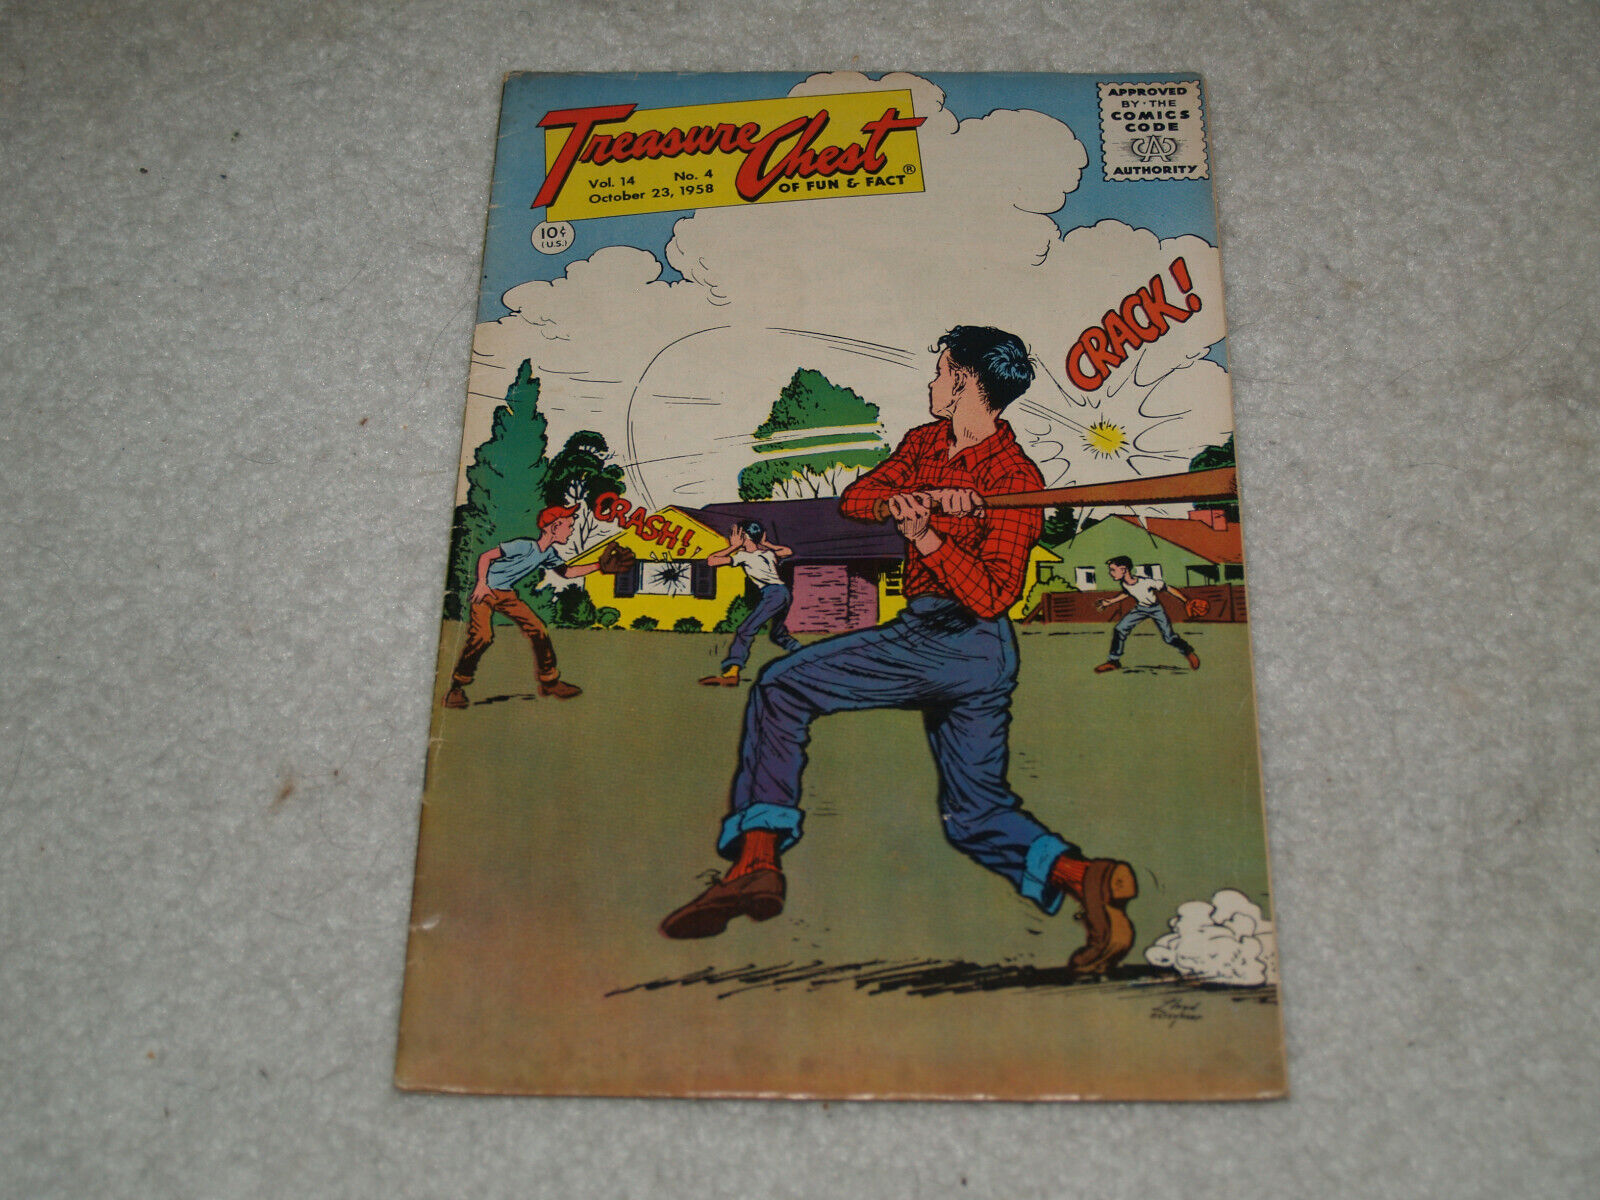 Treasure Chest issue# Vol 14 No 4 ( October 1958 ) low/mid grade